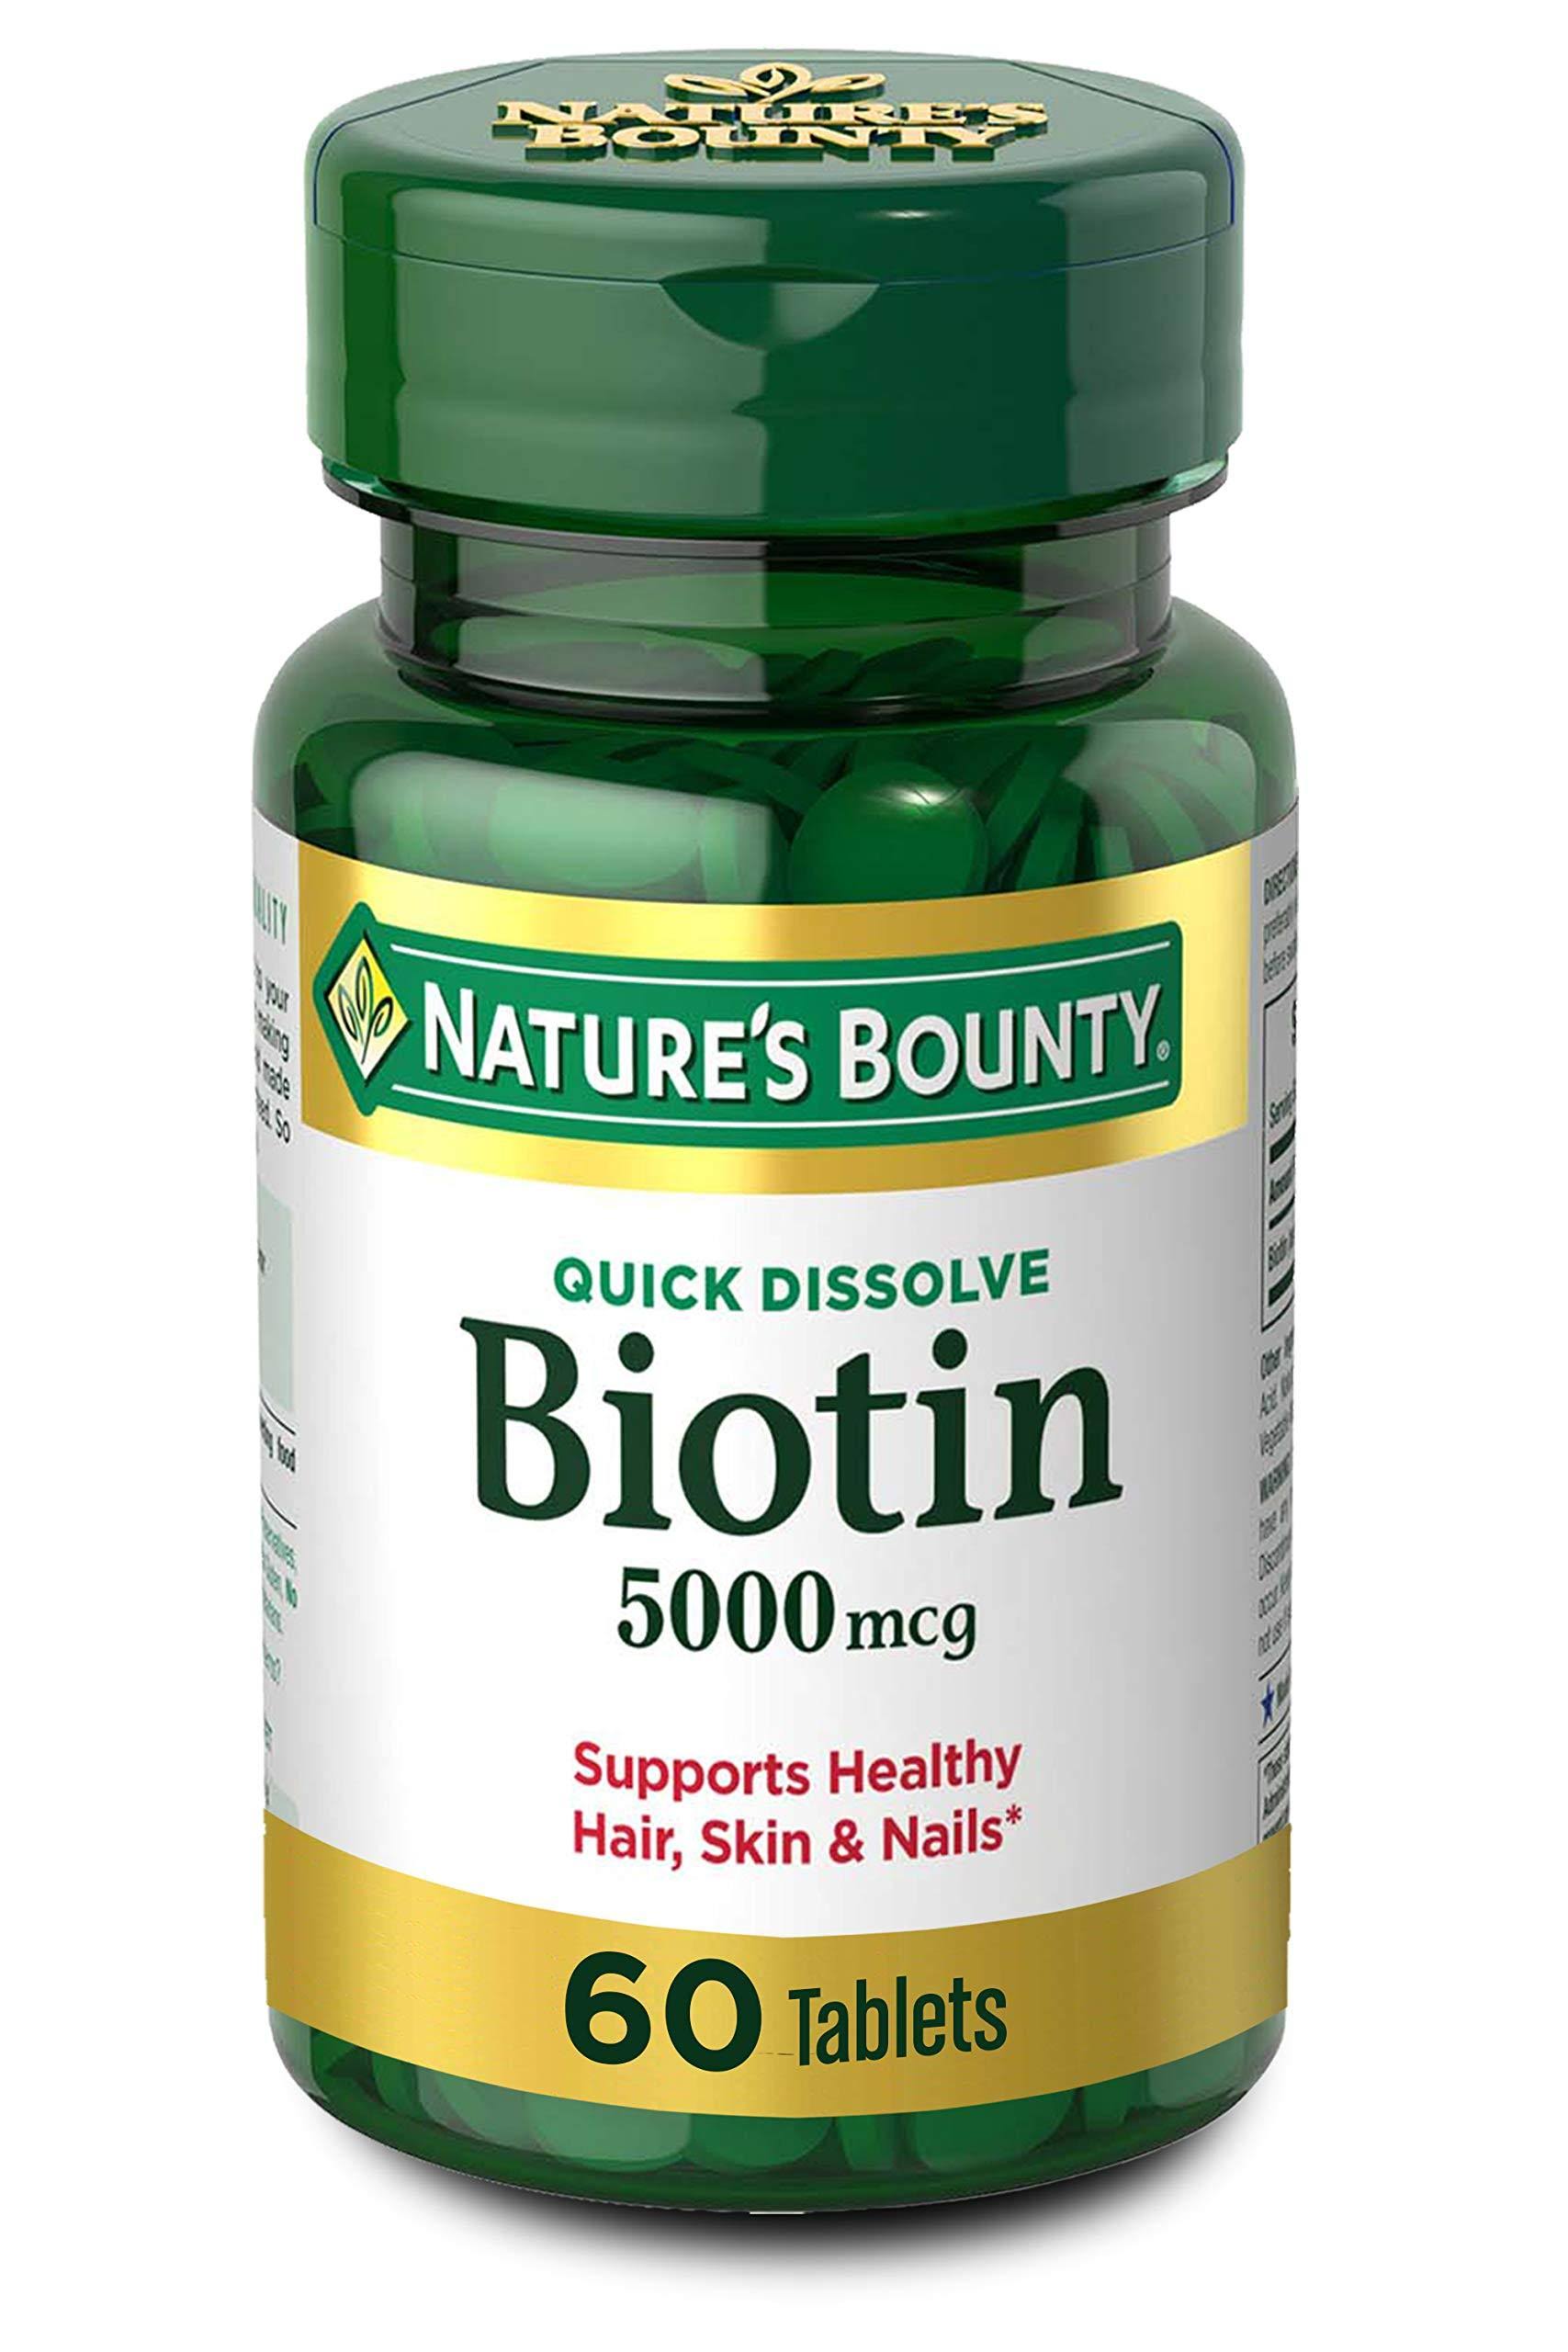 Natures Bounty Biotin Vitamin Supplement - 60 Tablets, 5000mcg